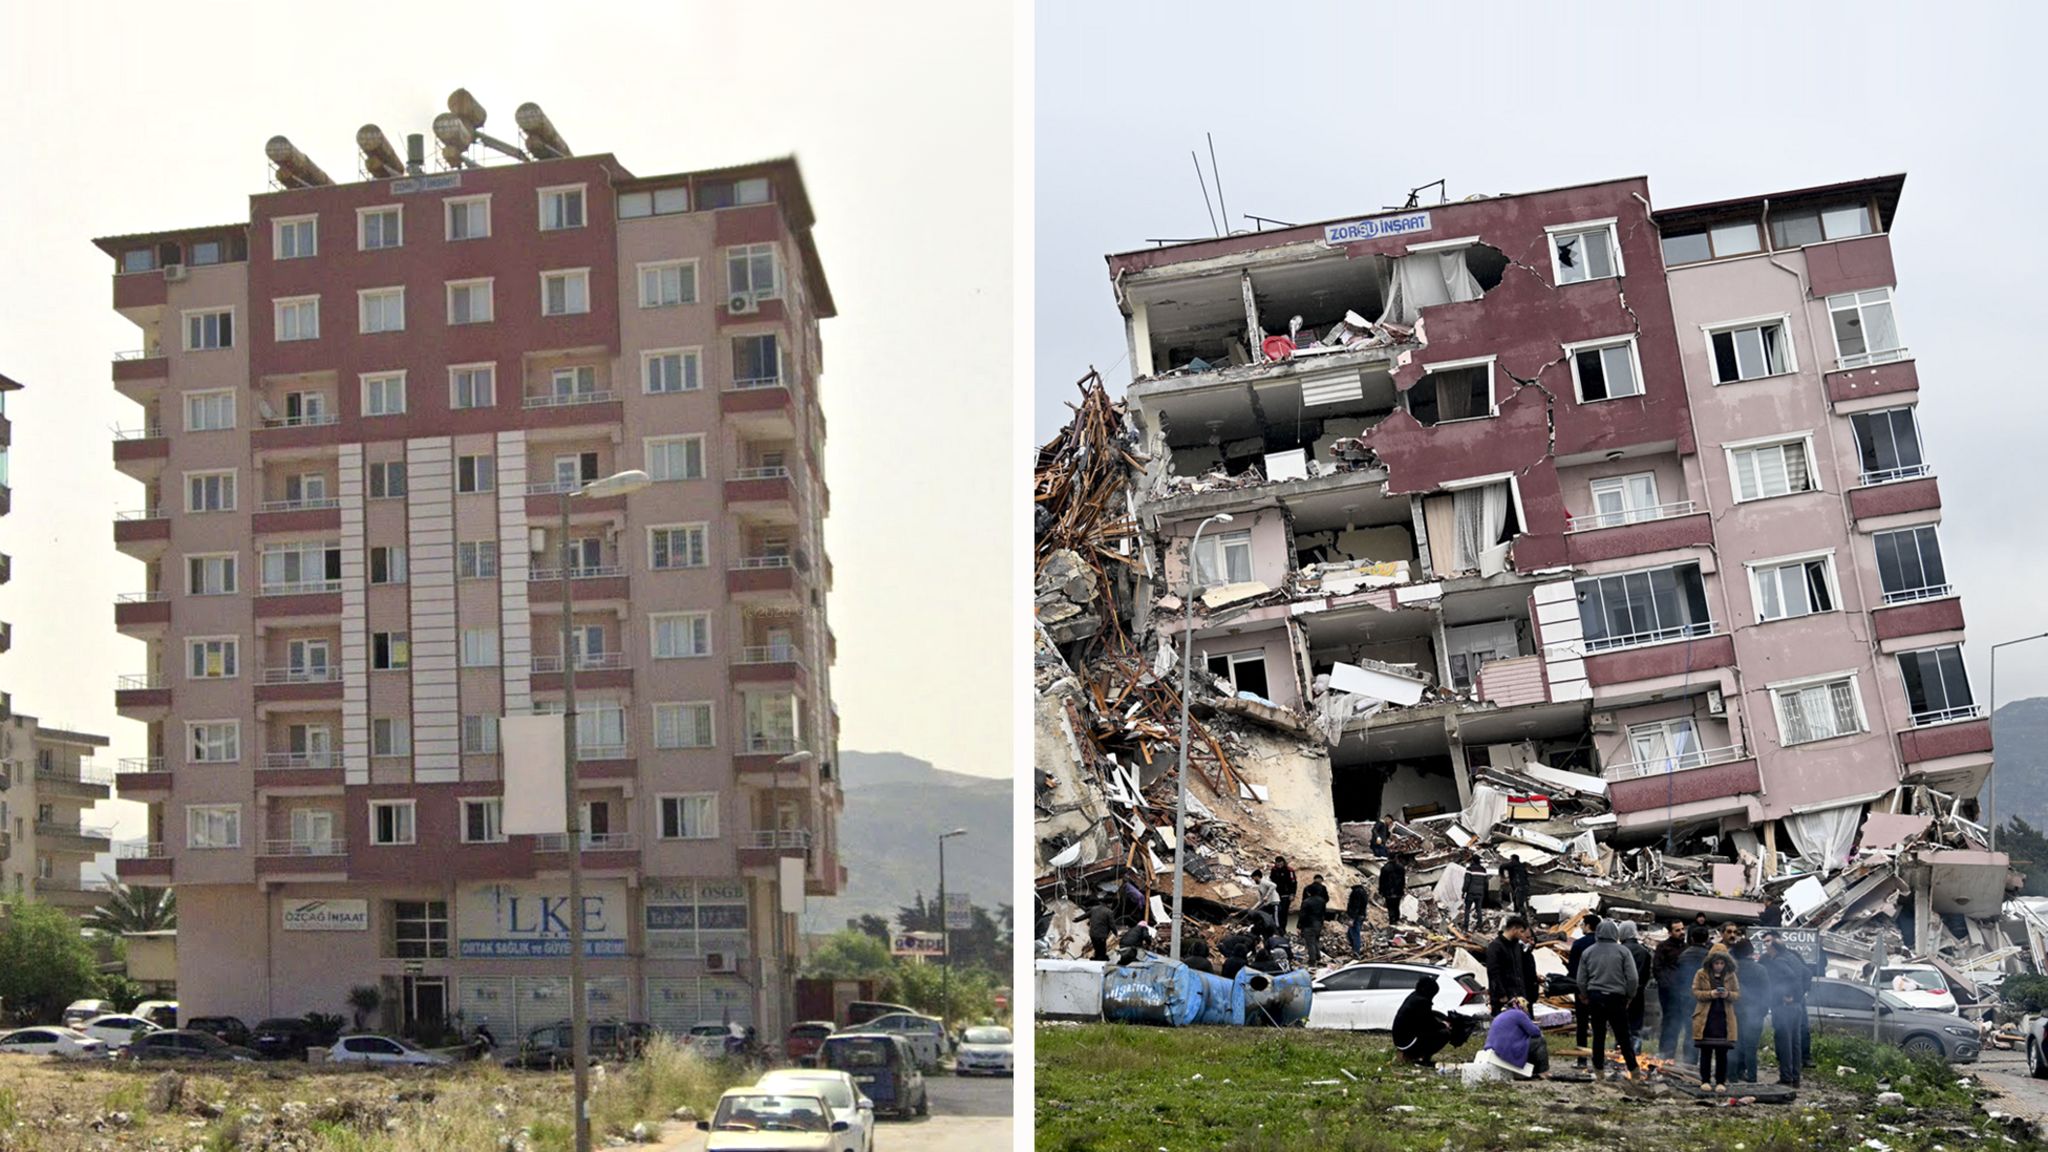 Damaged building in Hatay, Turkey